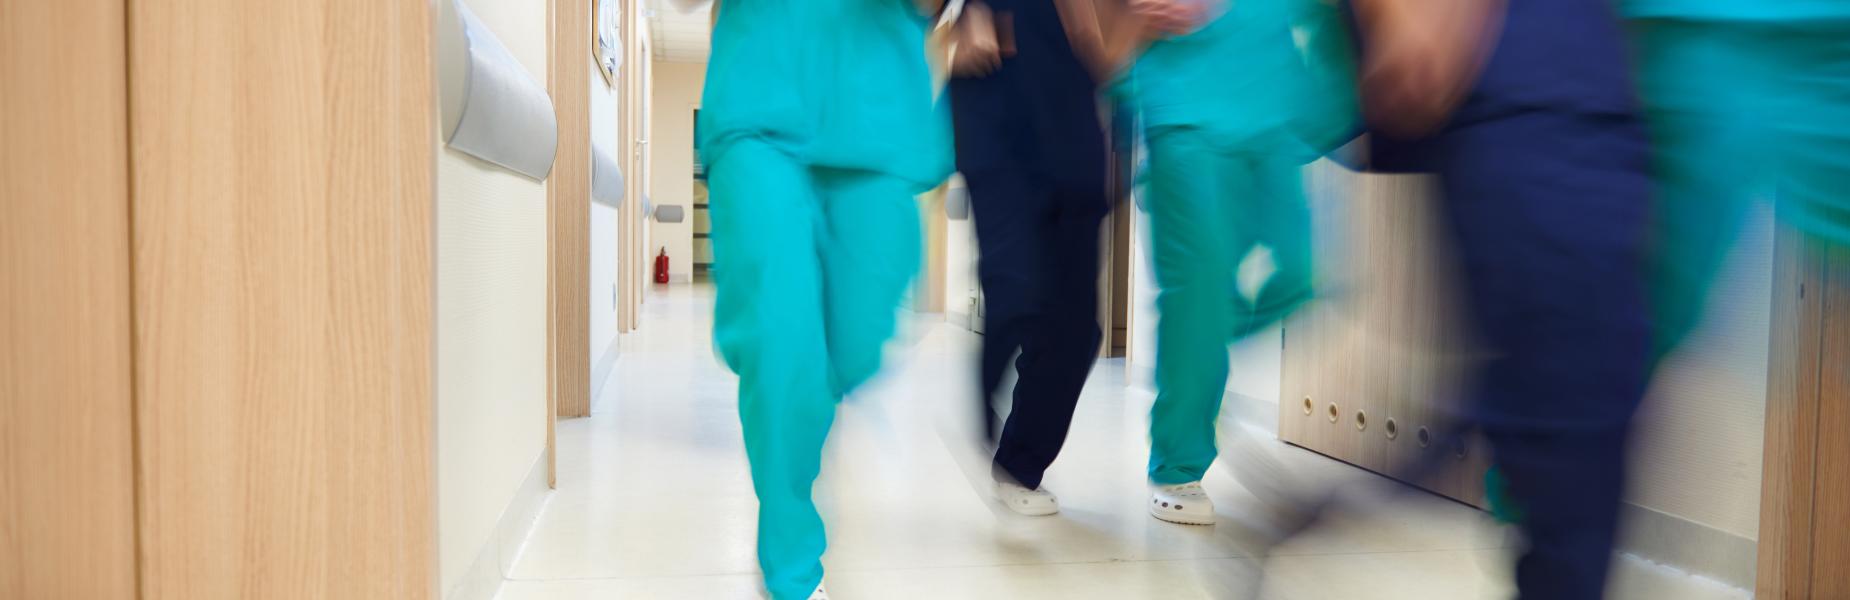 Hospital staff in a corridor